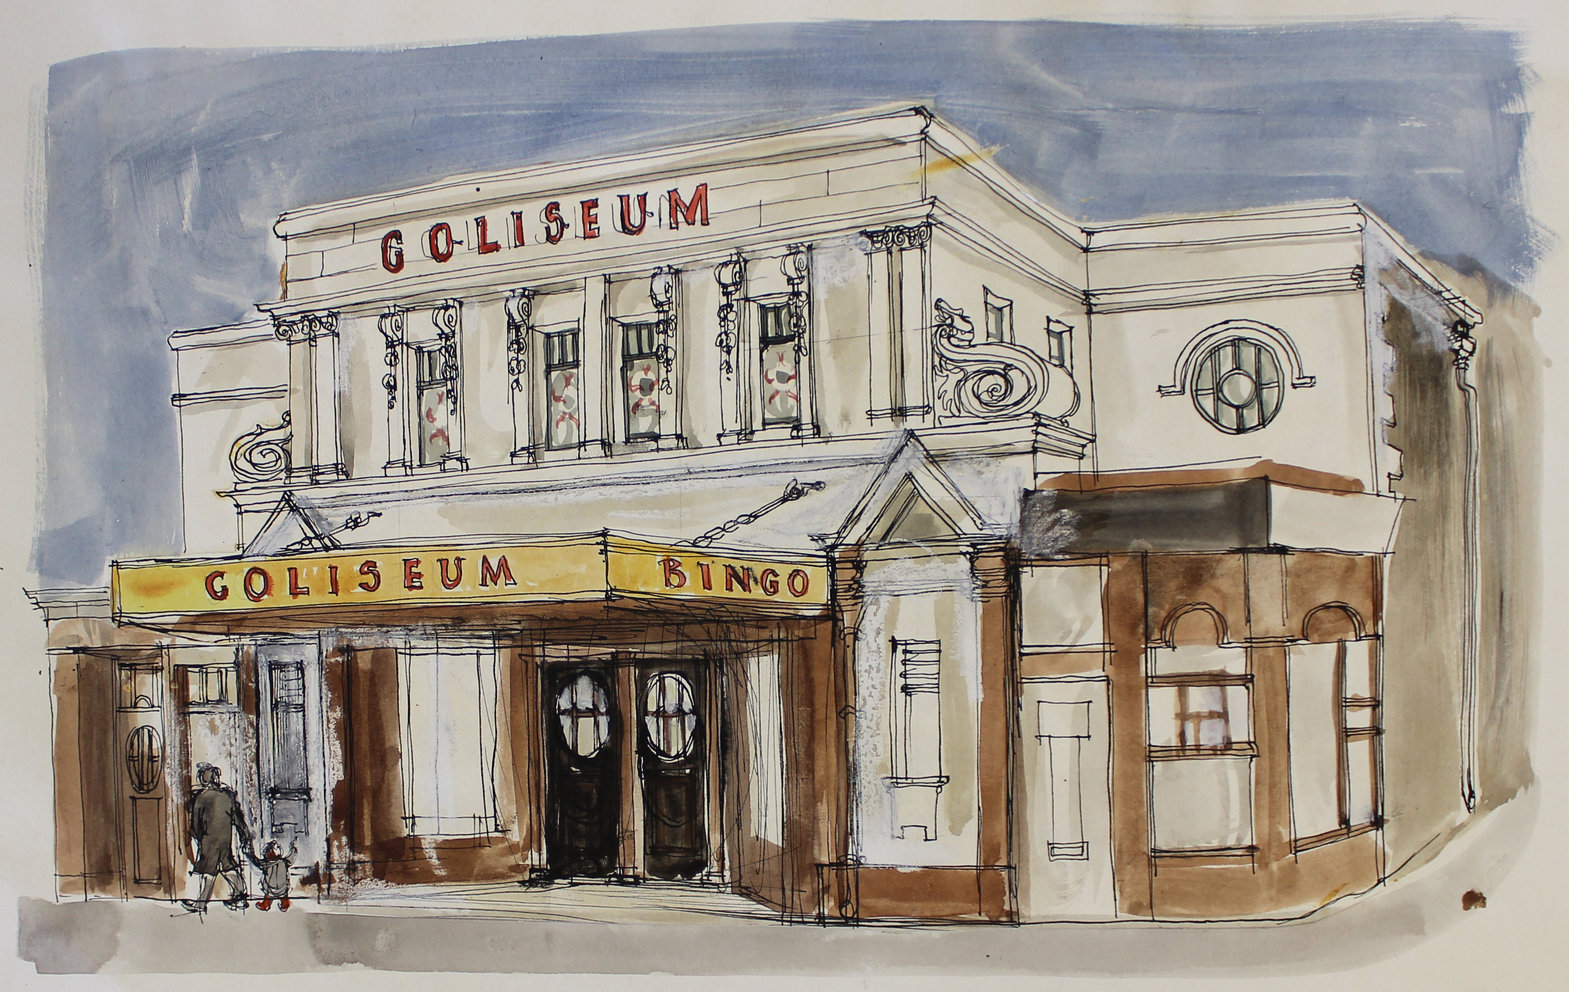 Coliseum cinema